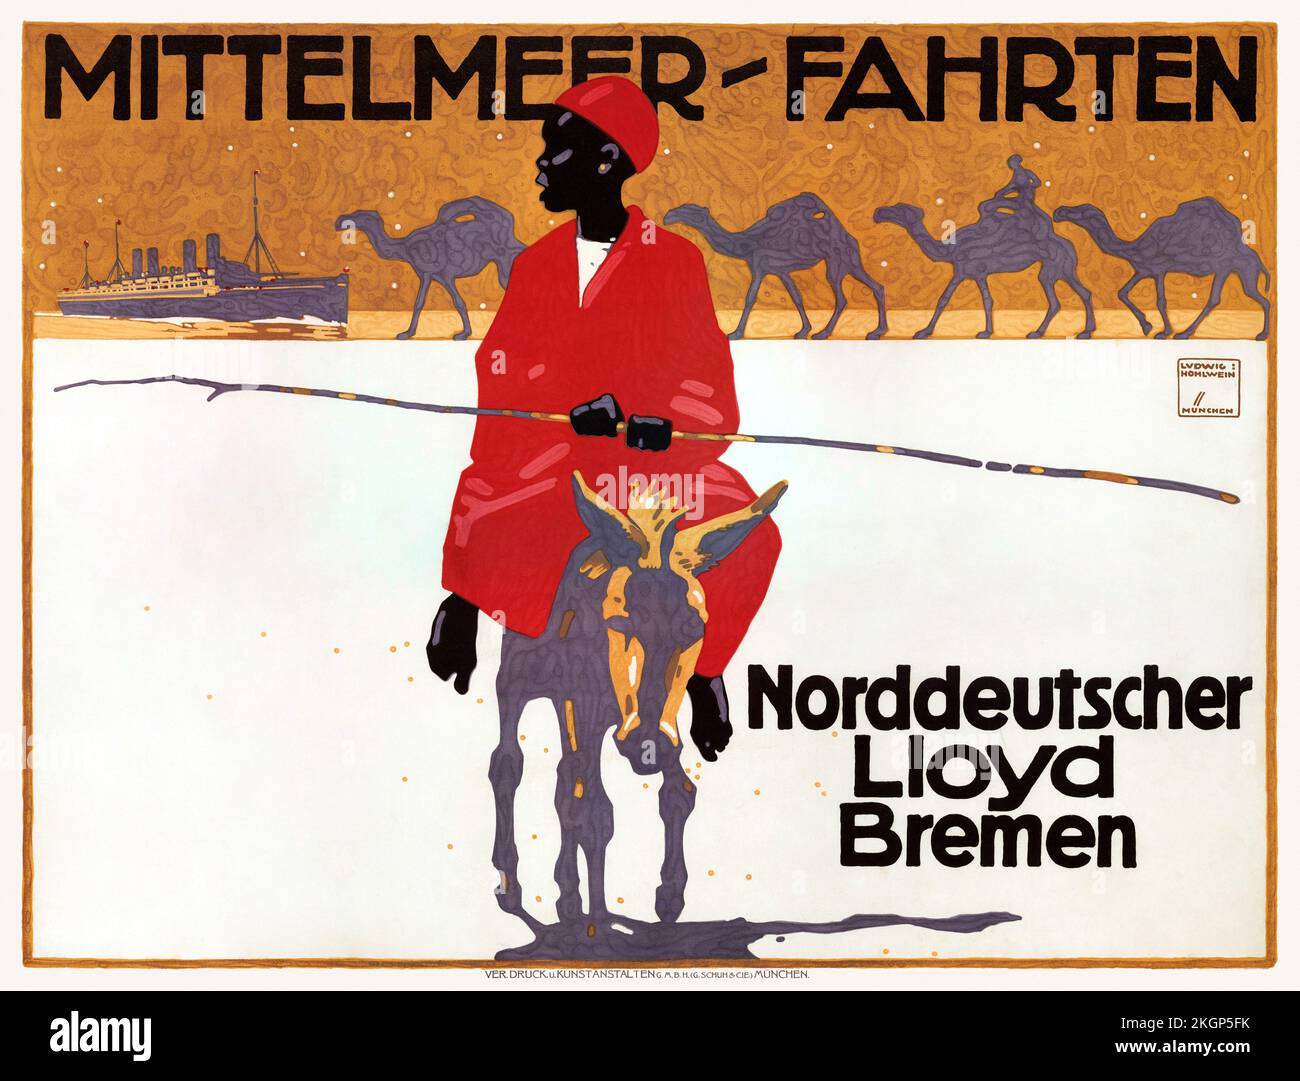 Mittelmeer-Fahrten. Norddeutscher Lloyd Bremen by Ludwig Hohlwein (1874-1949). Poster published in 1913 in Germany. Stock Photo